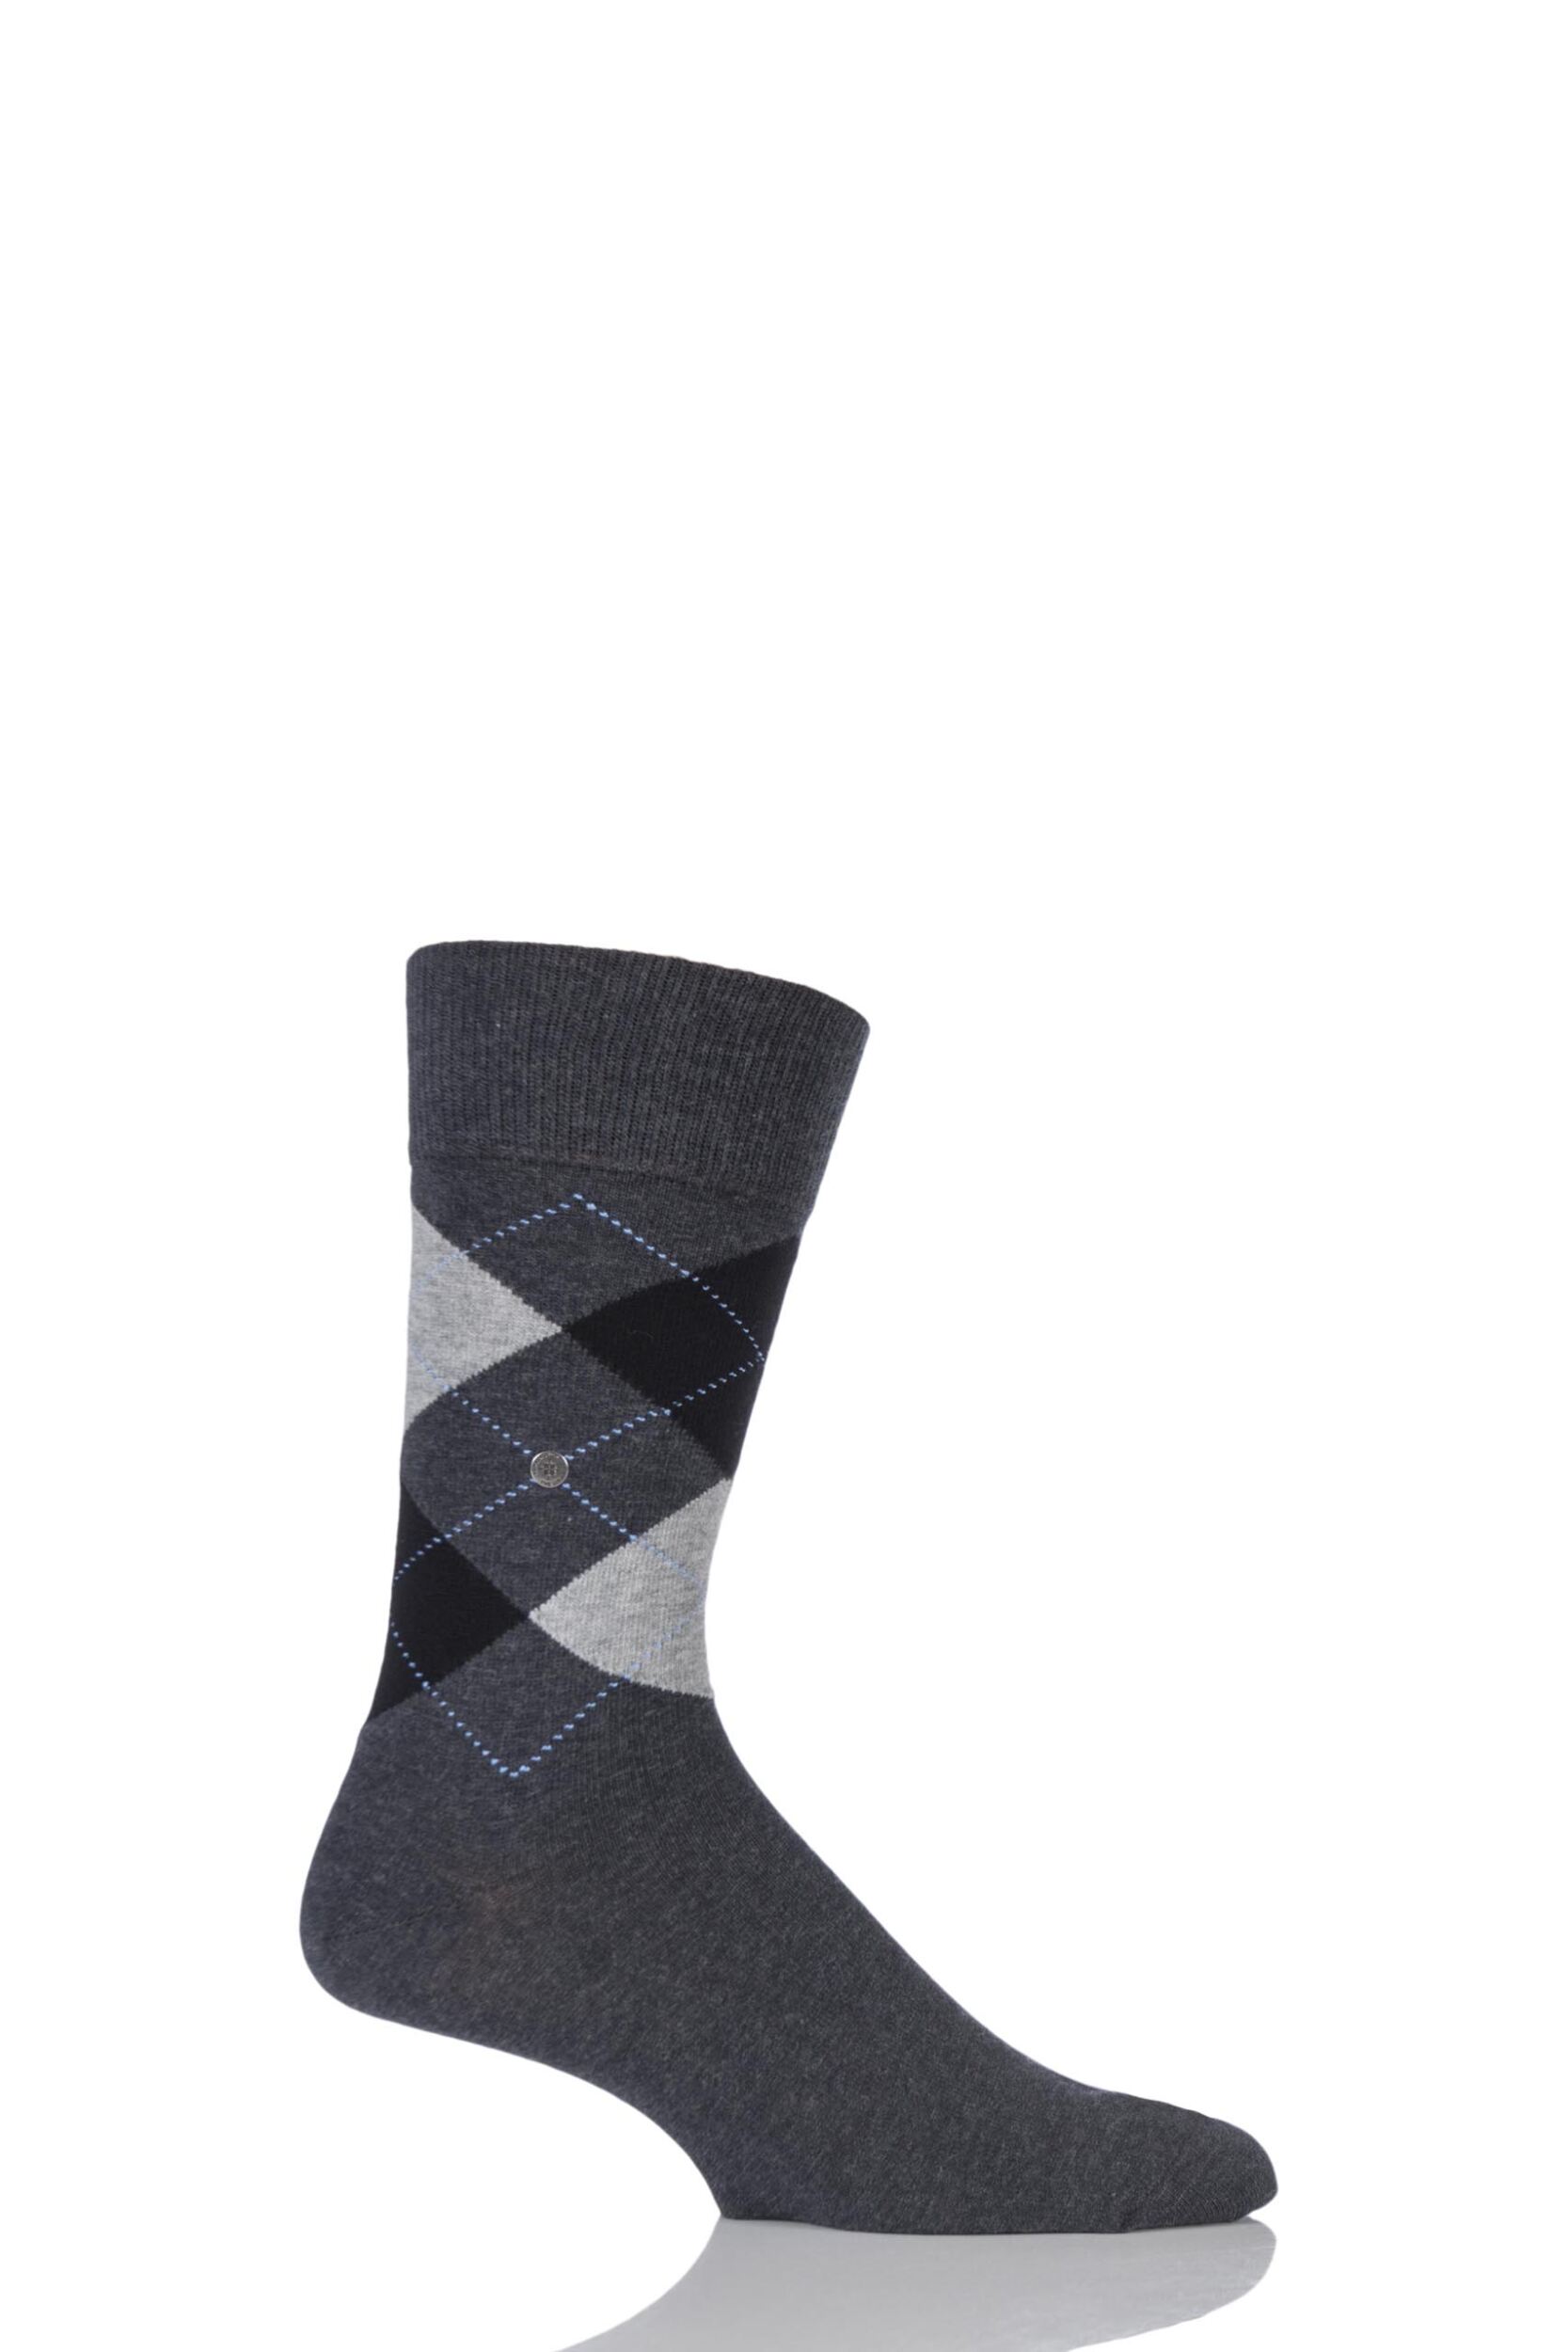 Mens 1 Pair Burlington King Argyle Cotton Socks | eBay